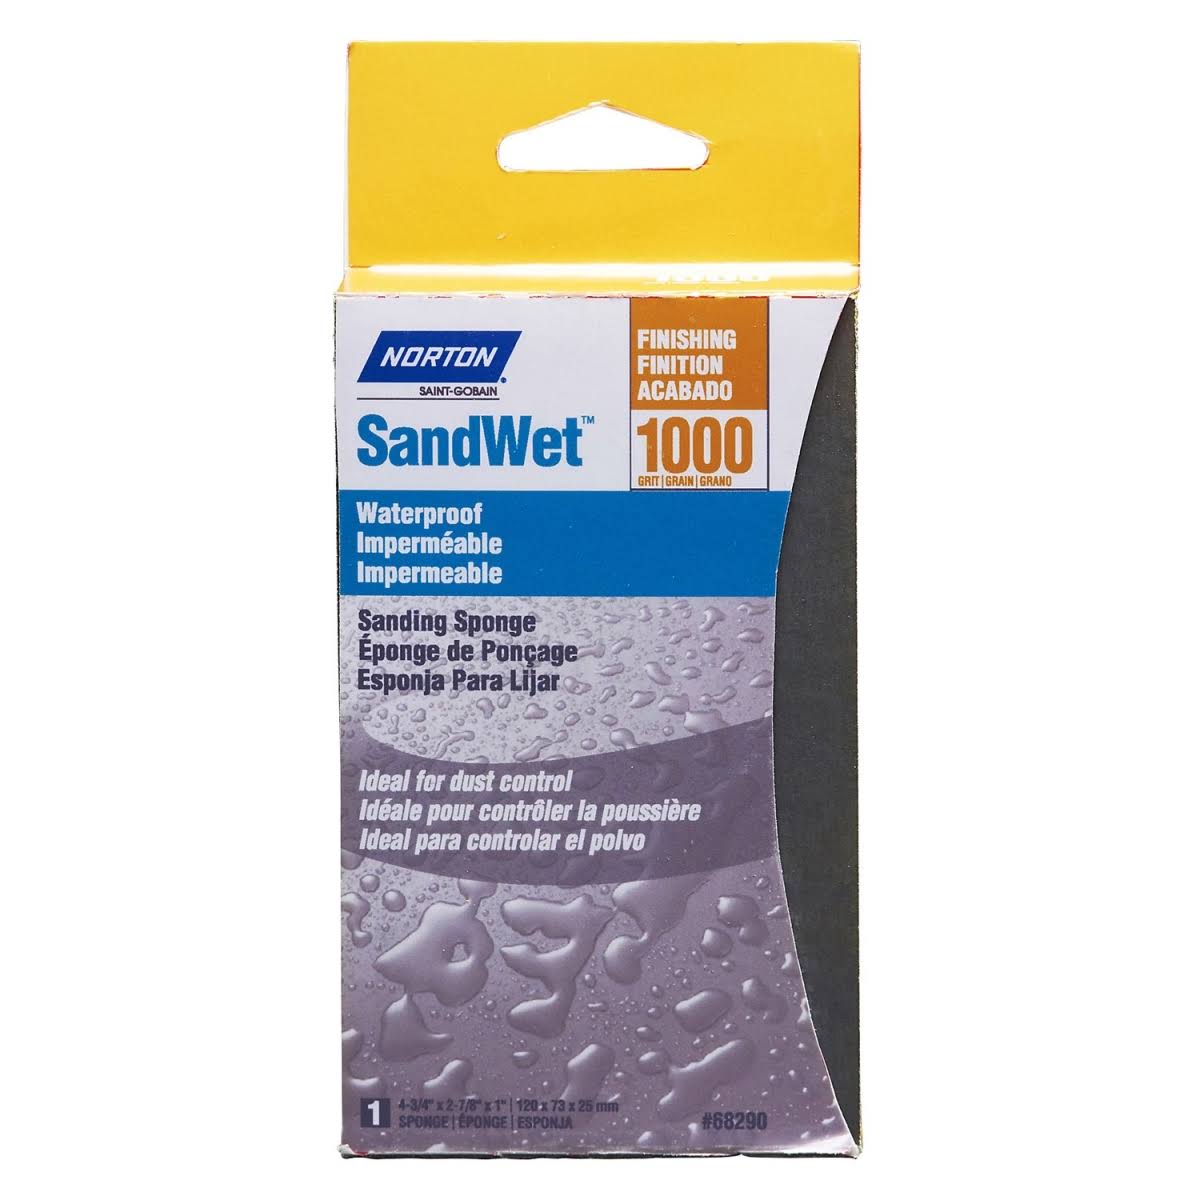 Norton Sandwet Sanding Sponge, 1000 Grit | Household Supplies